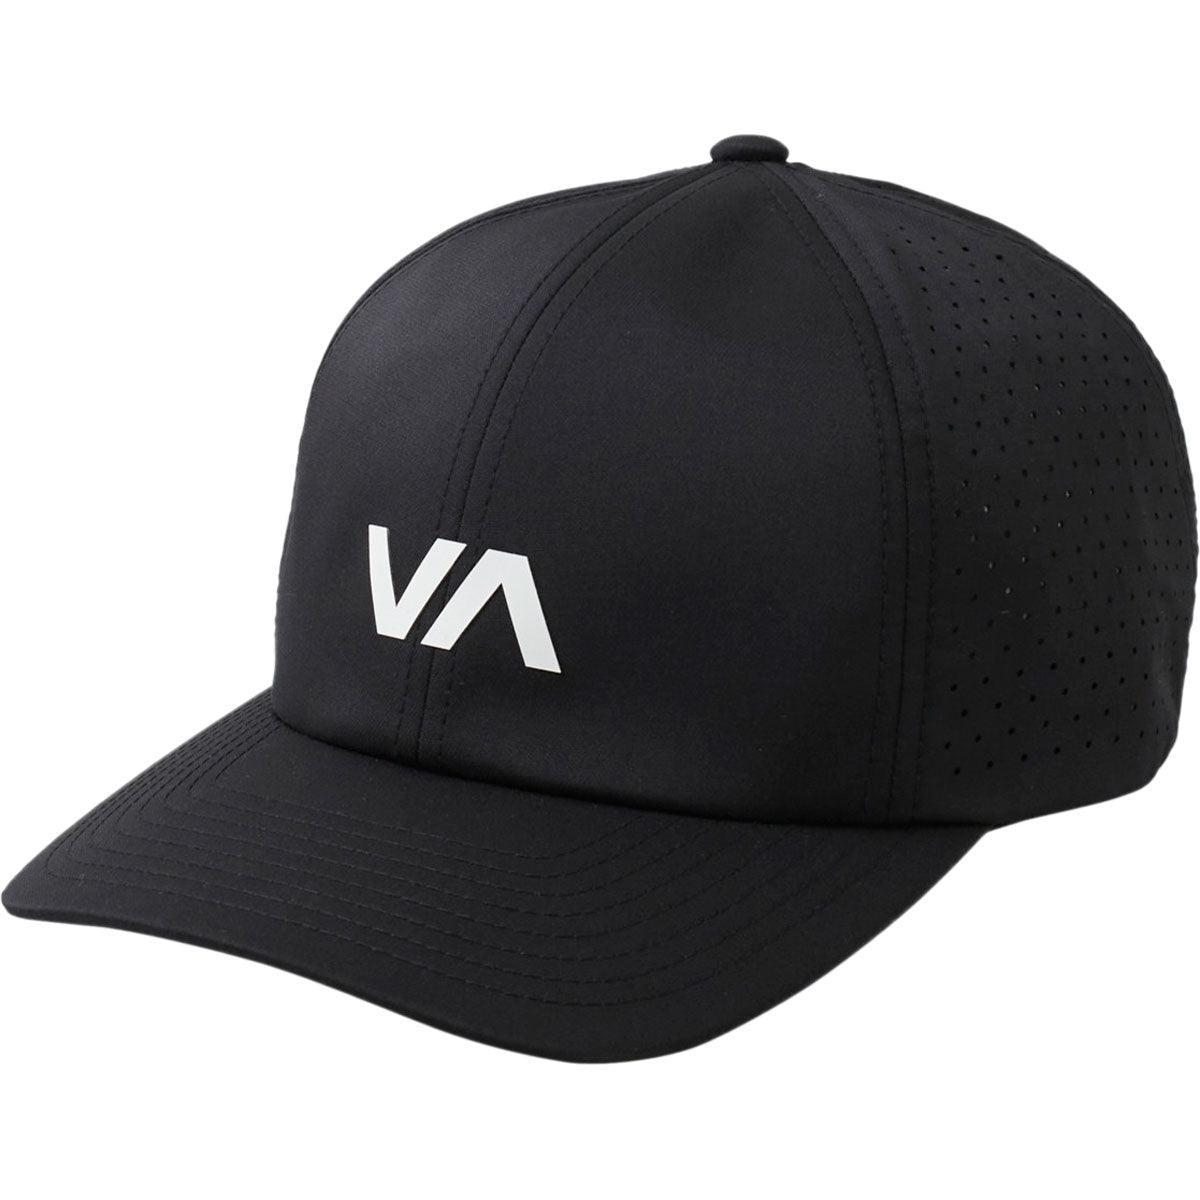 RVCA Vent II Hat - Black image 1